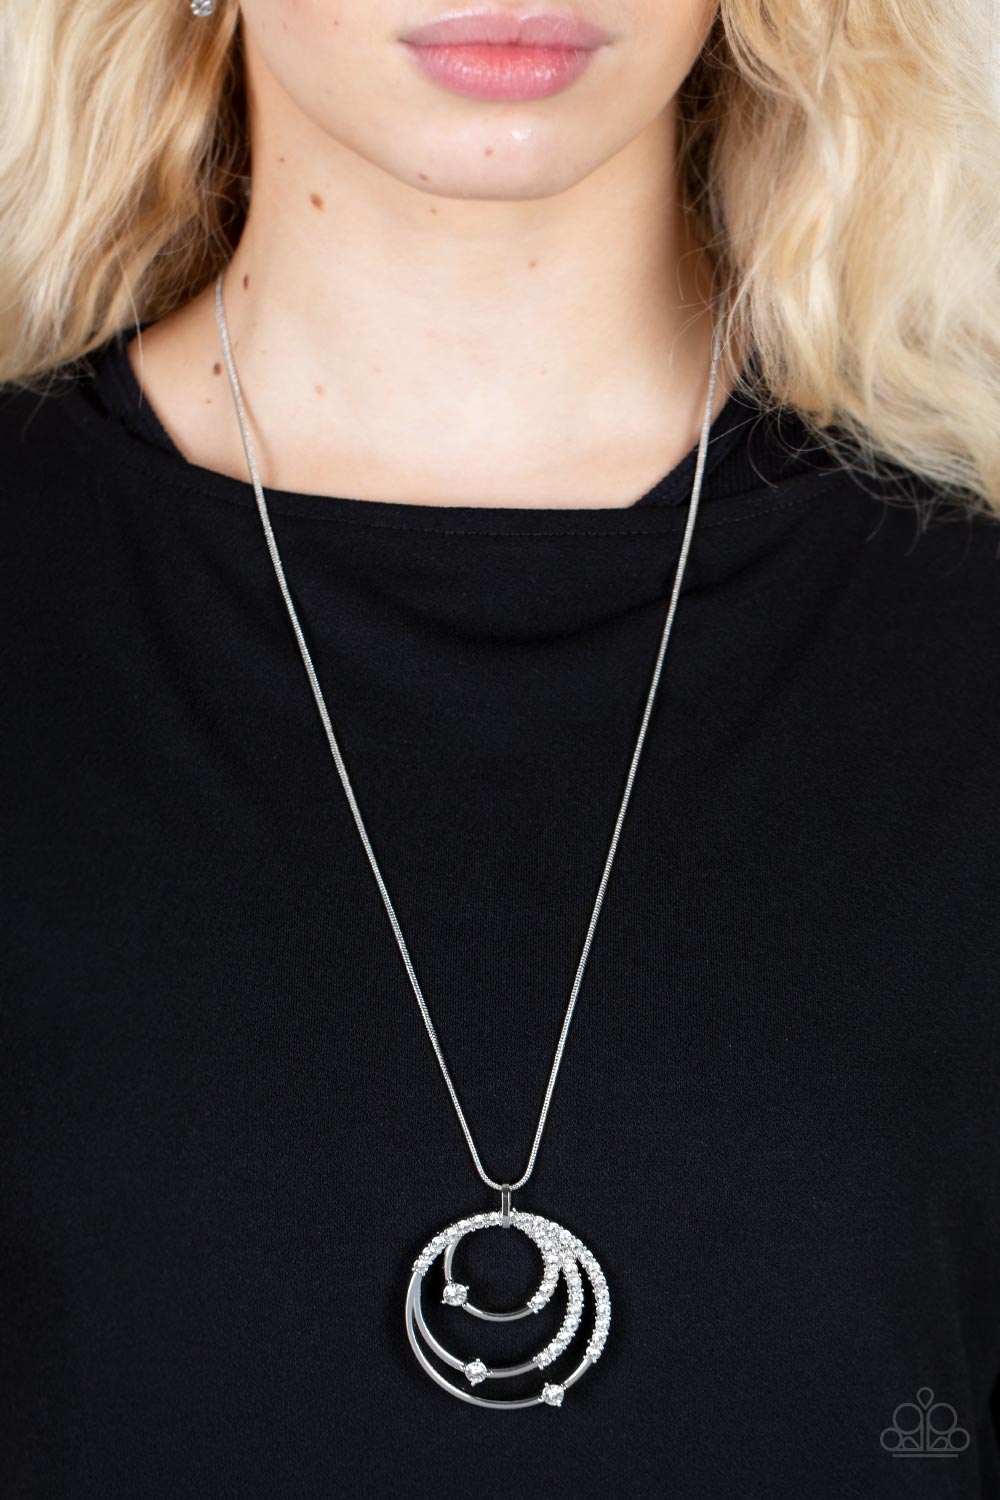 Ecliptic Elegance - White Rhinestone Encrusted Silver Rings Pendant Paparazzi Necklace & matching earrings